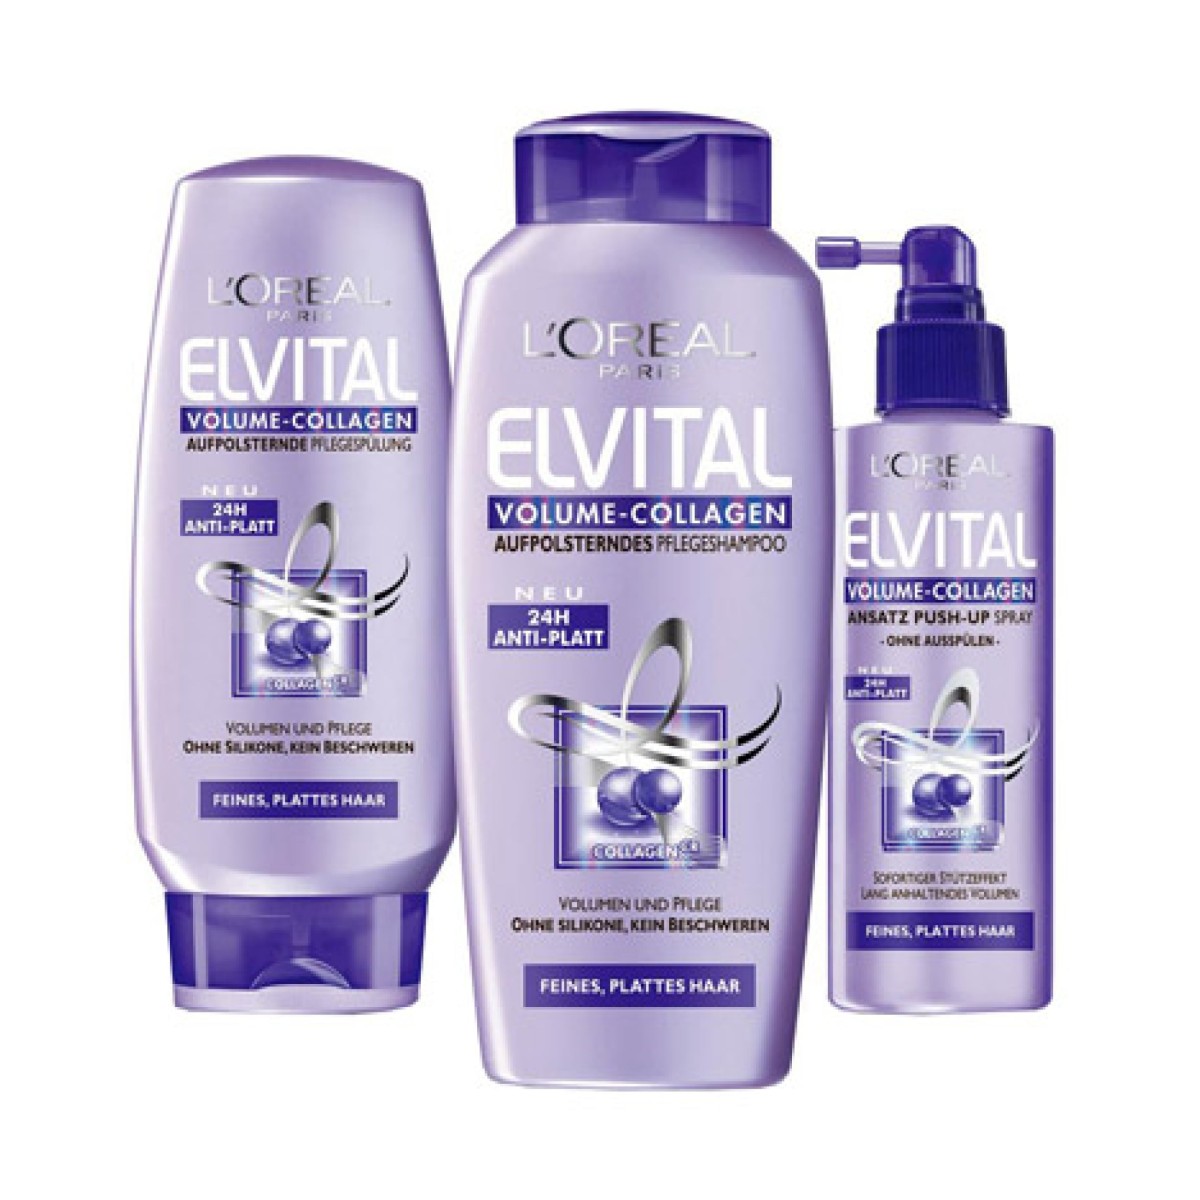 L'Oréal ELVITAL Volume-Collagen Volumen → REGAL